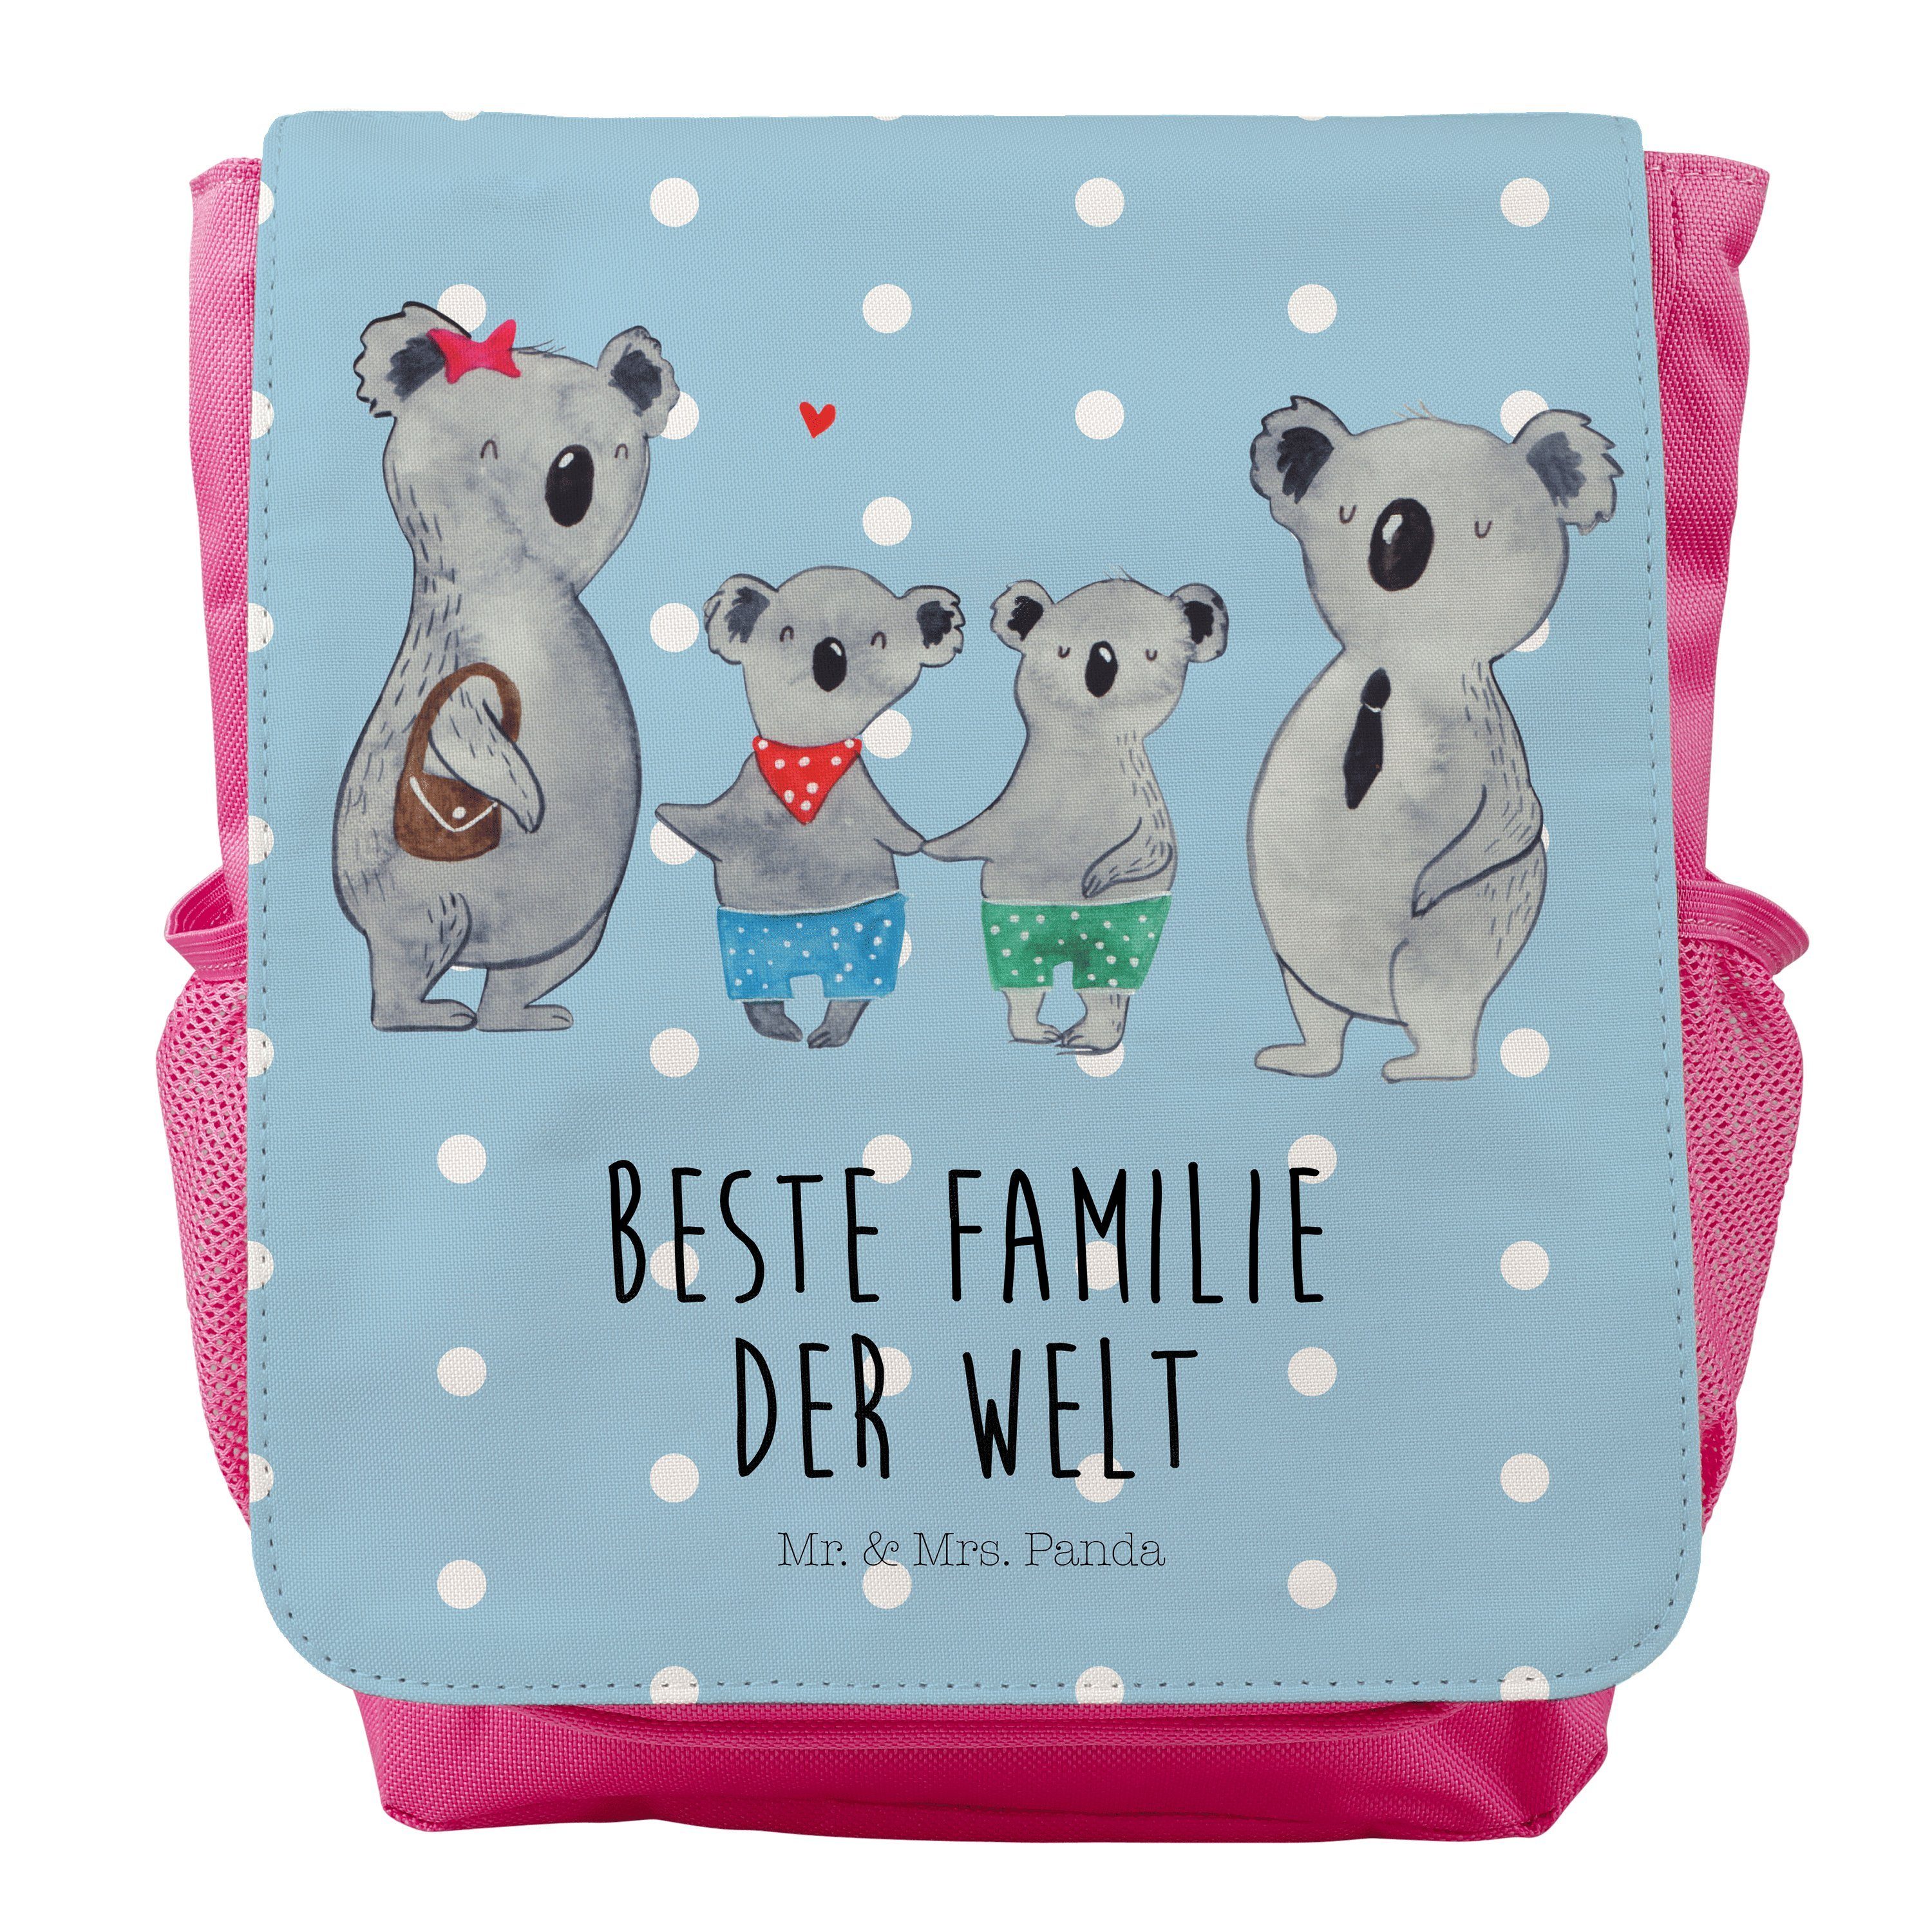 Mr. & Mrs. Panda Kinderrucksack Koala Familie zwei - Blau Pastell - Geschenk, Koalabär, Bruder, Rucks